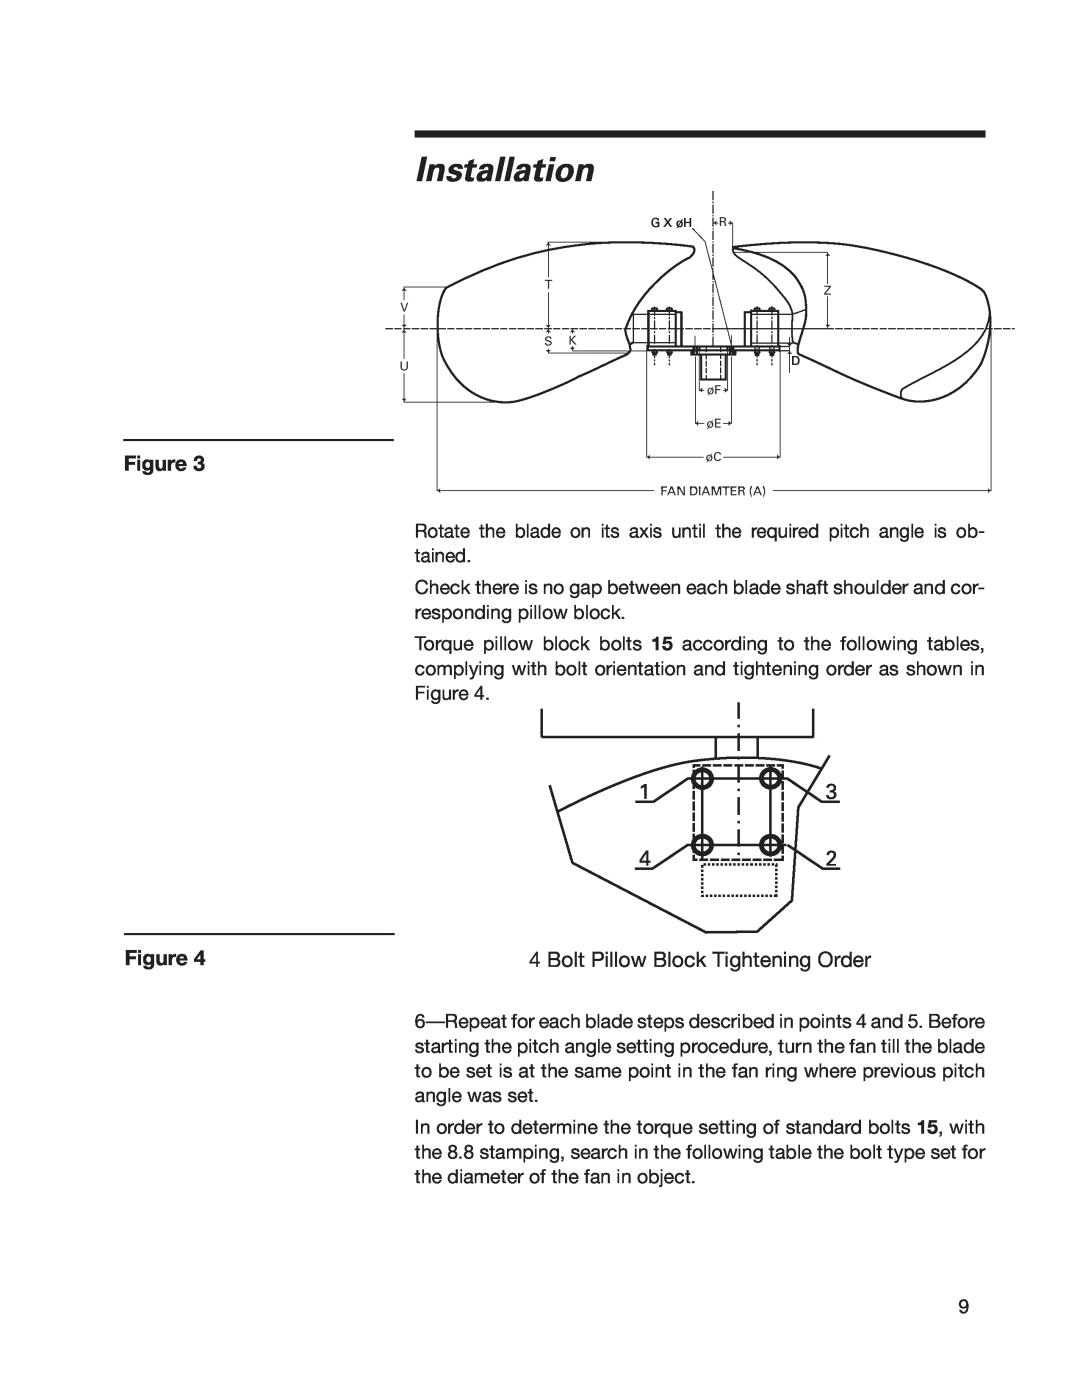 SPX Cooling Technologies 07-1126 user manual Installation, Bolt Pillow Block Tightening Order 